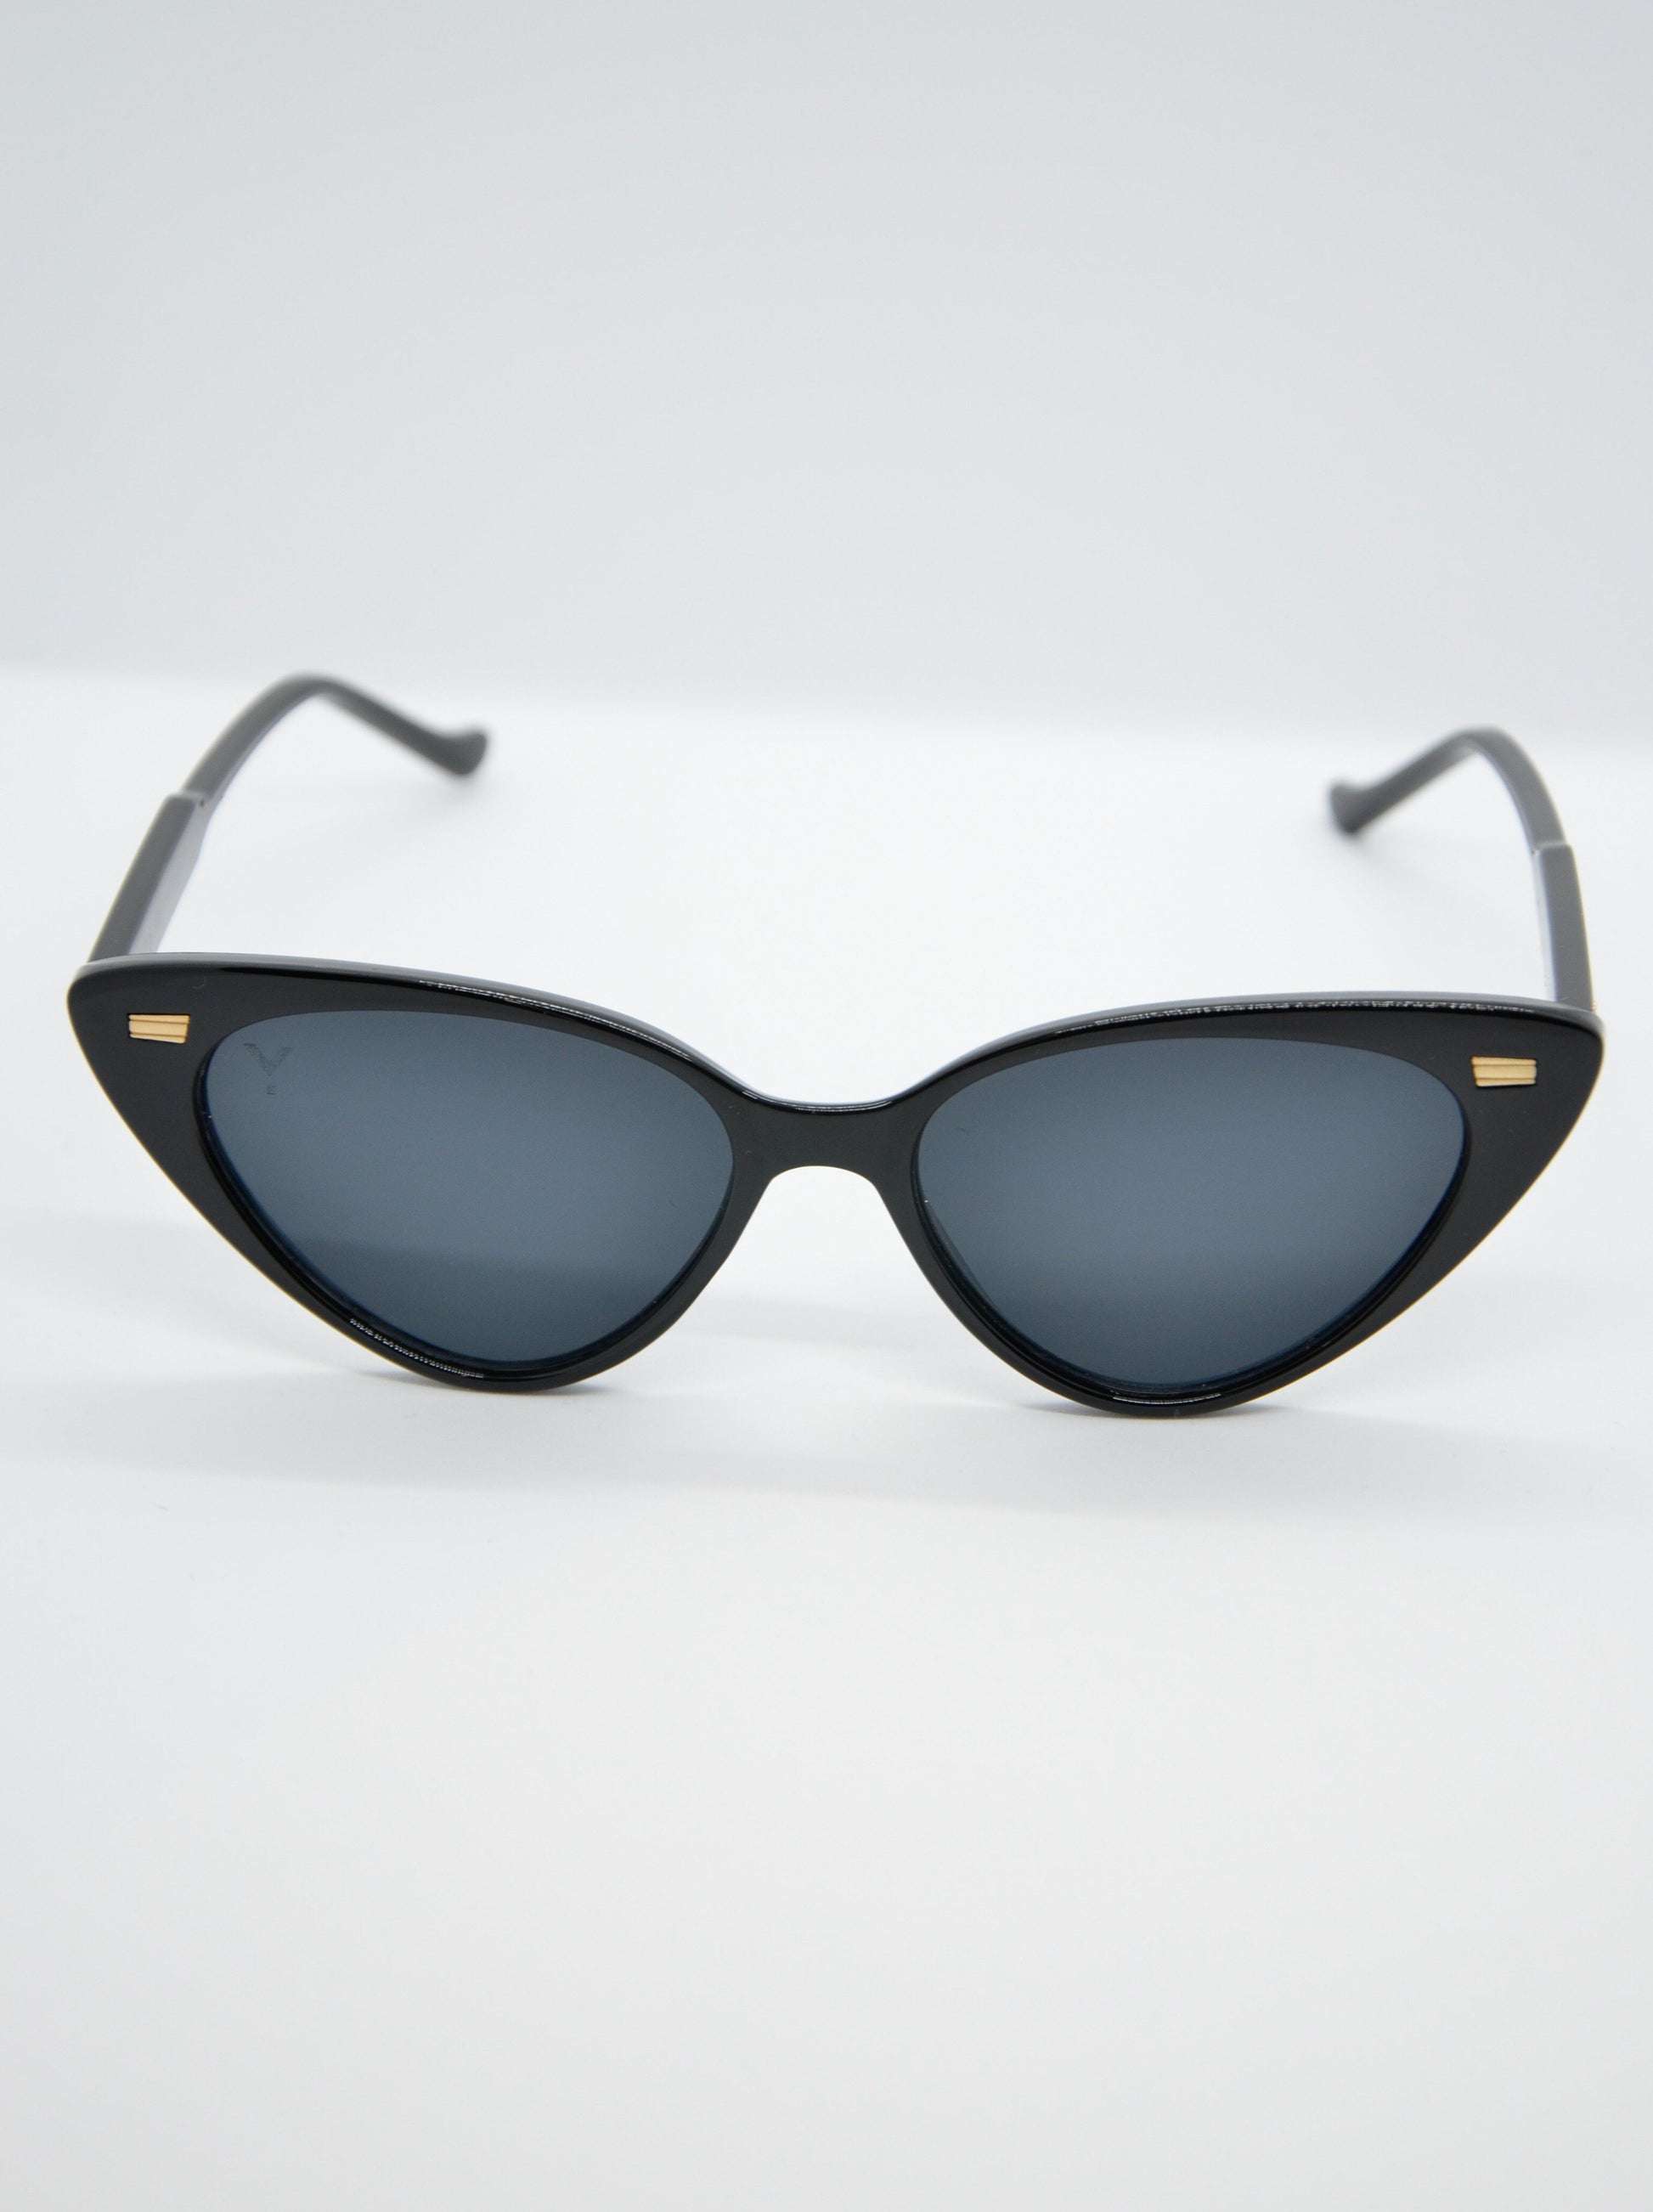 Astra - Sunglasses | AVAYOS